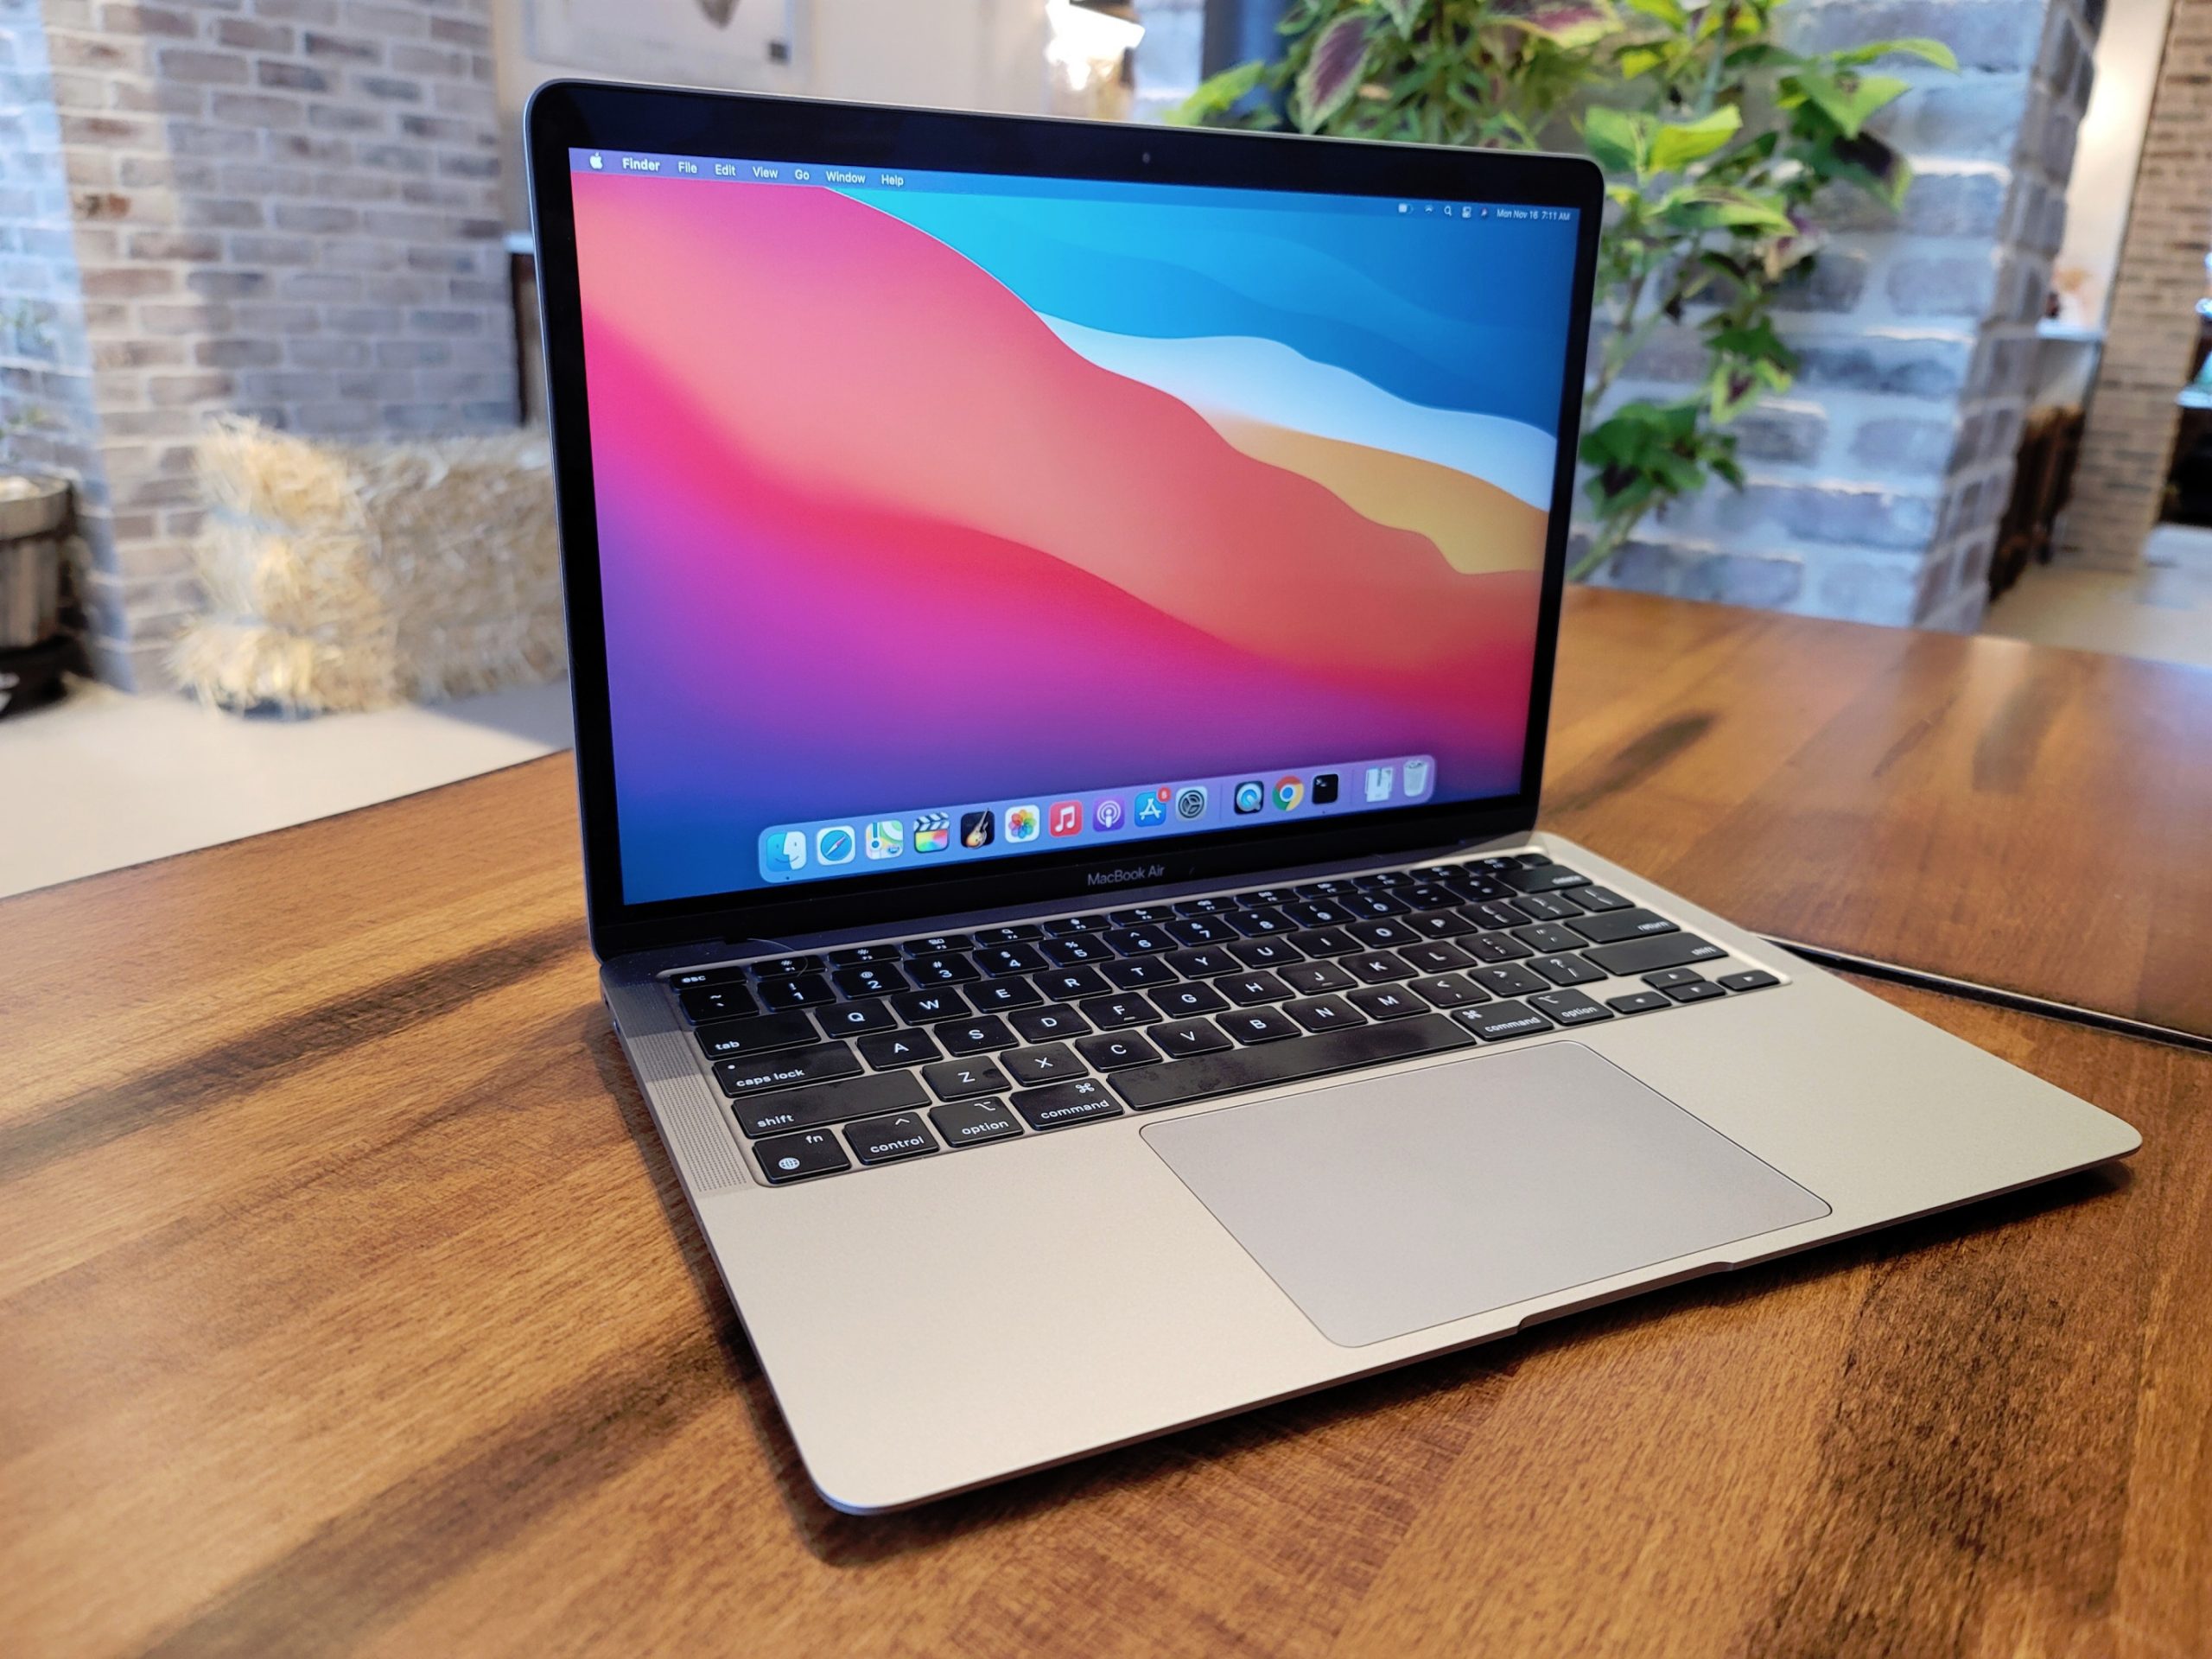 Apple MacBook Air 13 (M1, 2020)